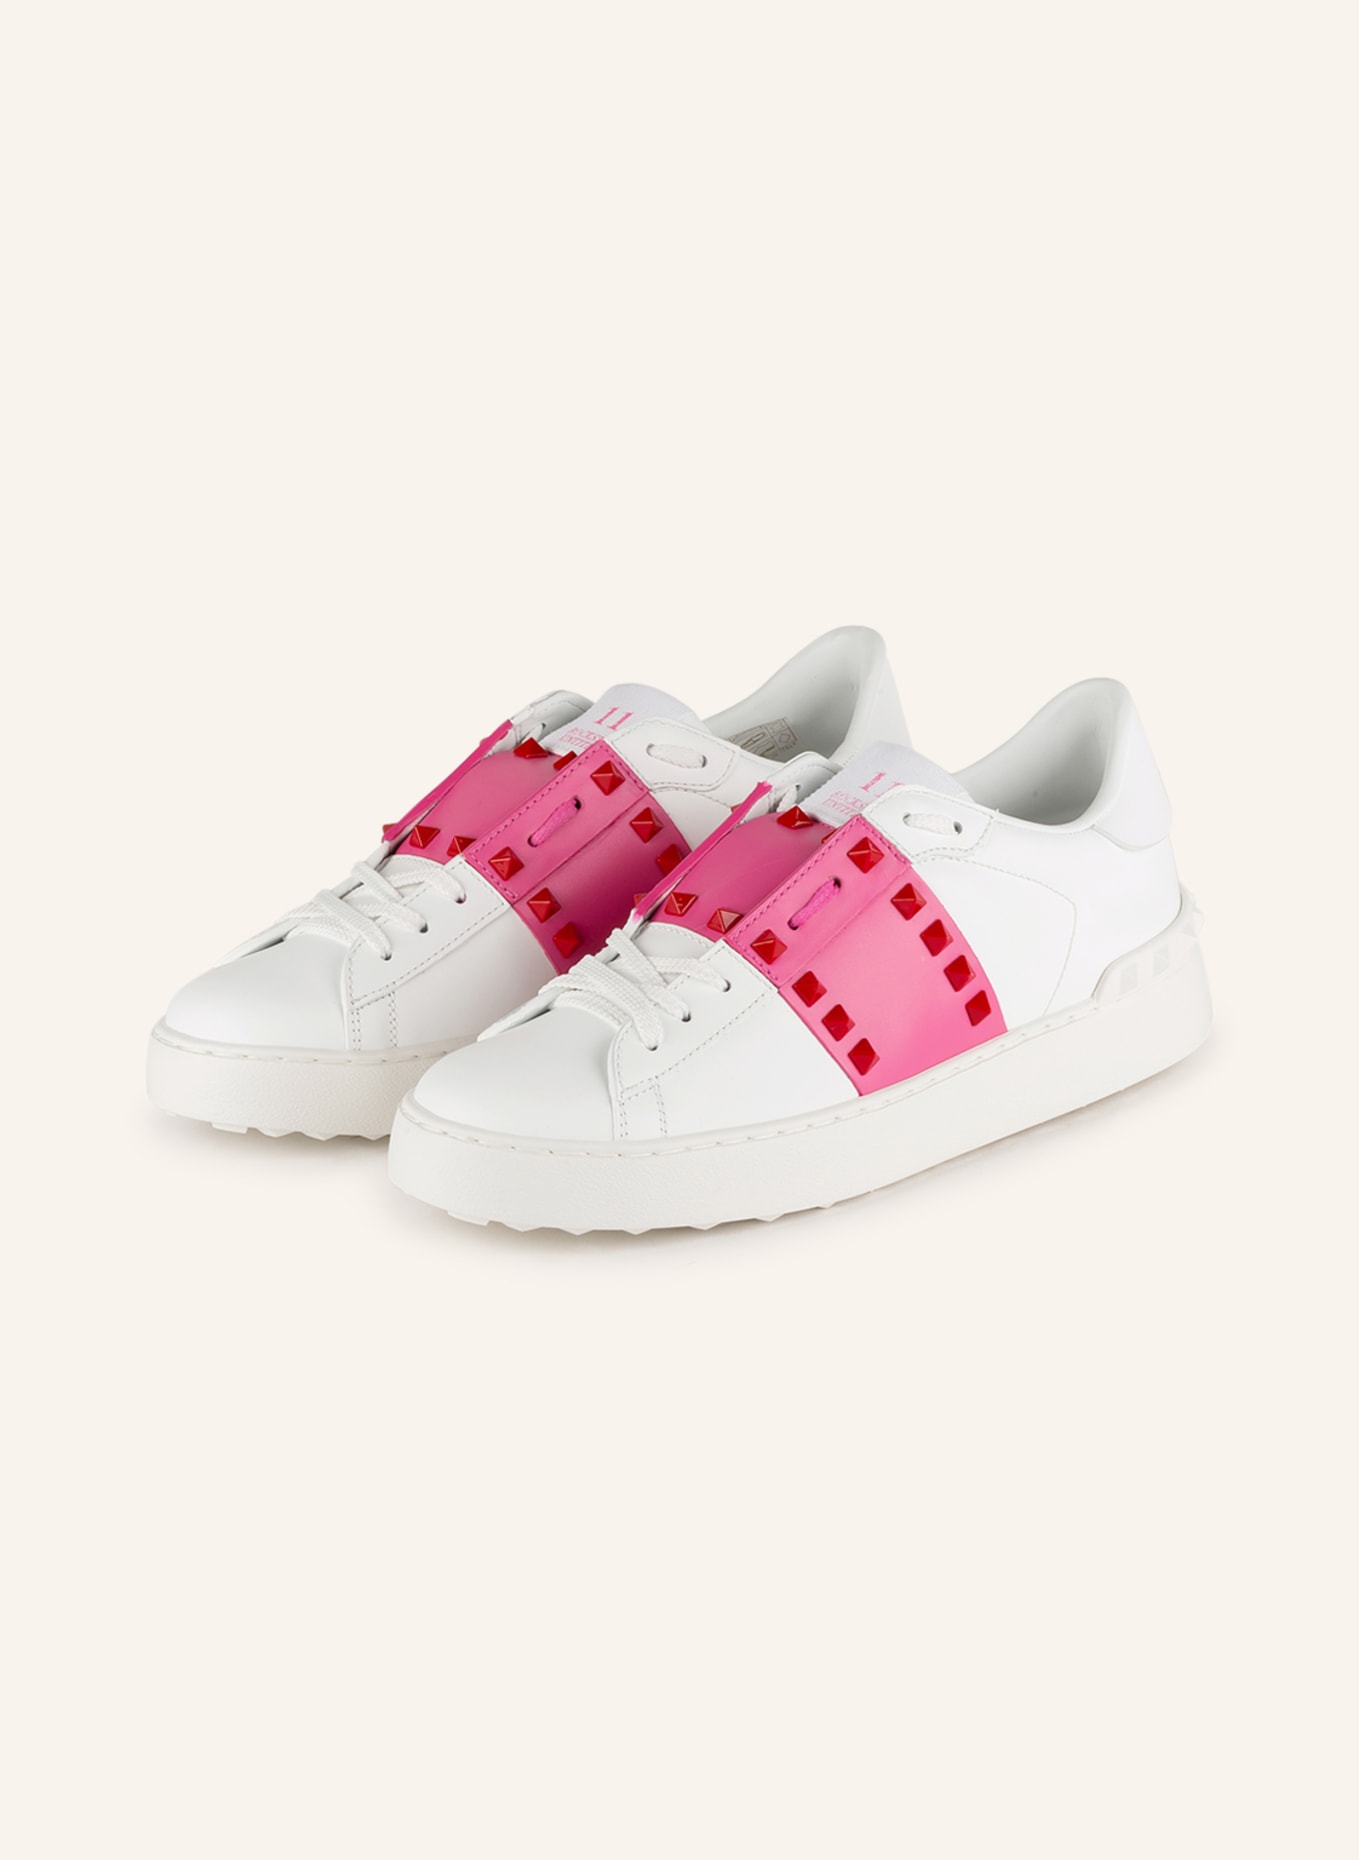 GARAVANI Sneakers ROCKSTUD in white/ pink | Breuninger